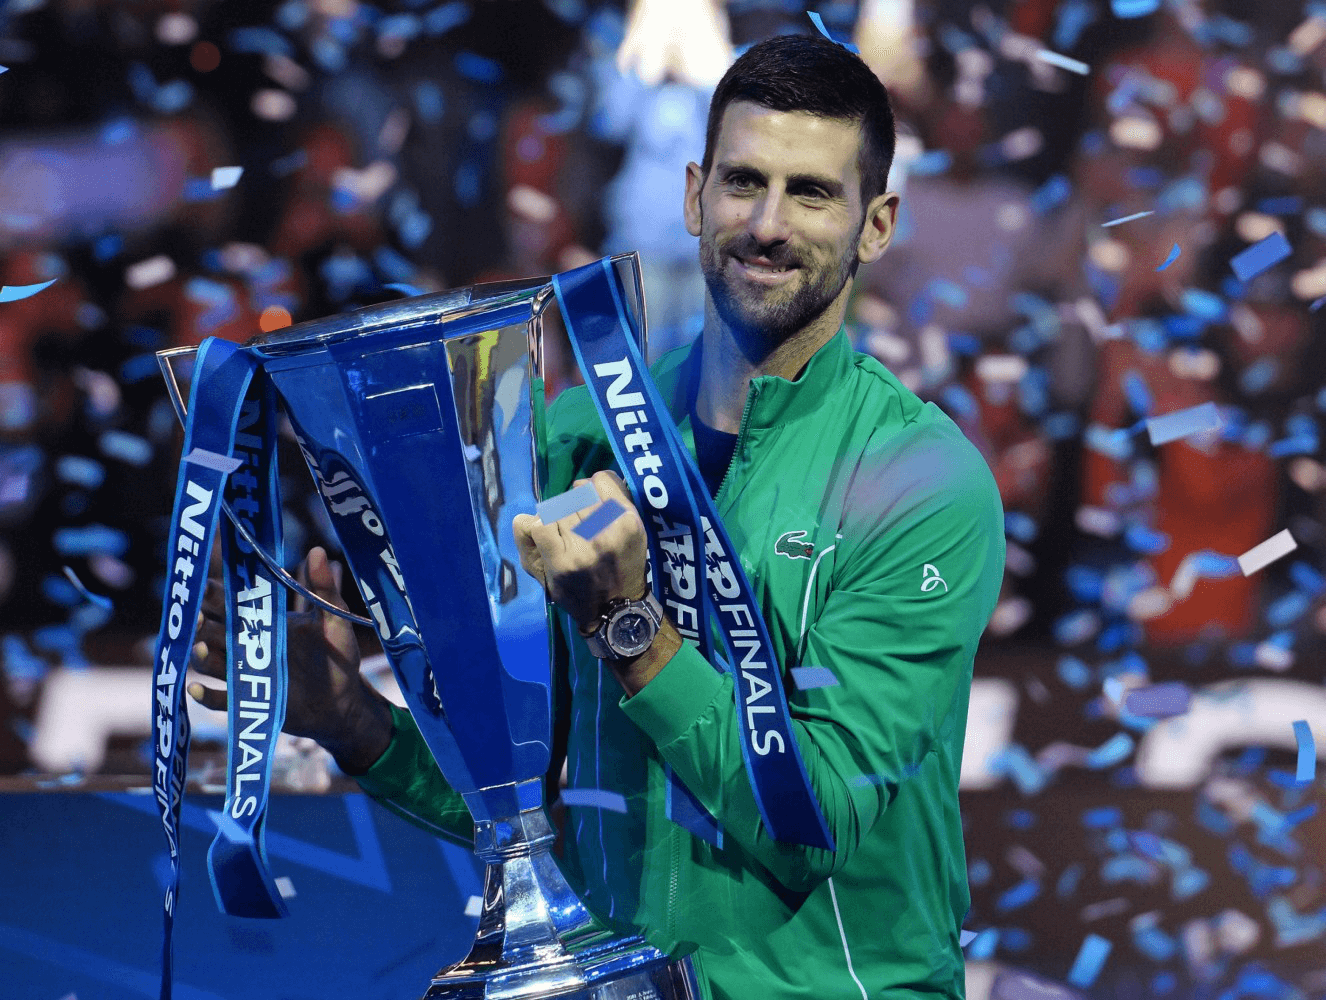 Novak Djokovic raising the trophy